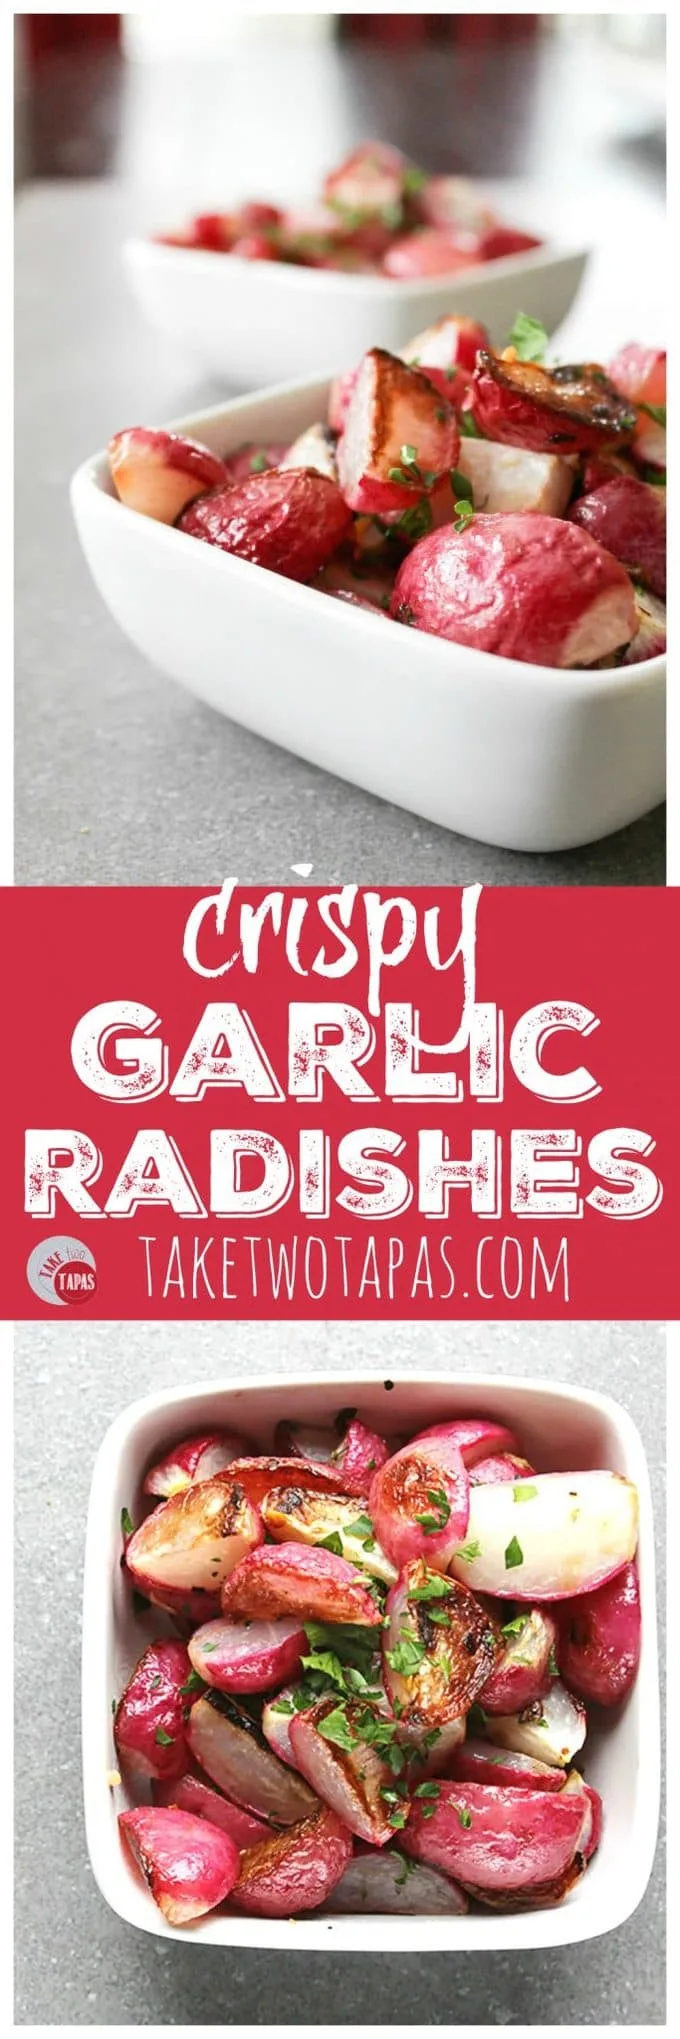 Pinterest double image with text "crispy garlic radishes"